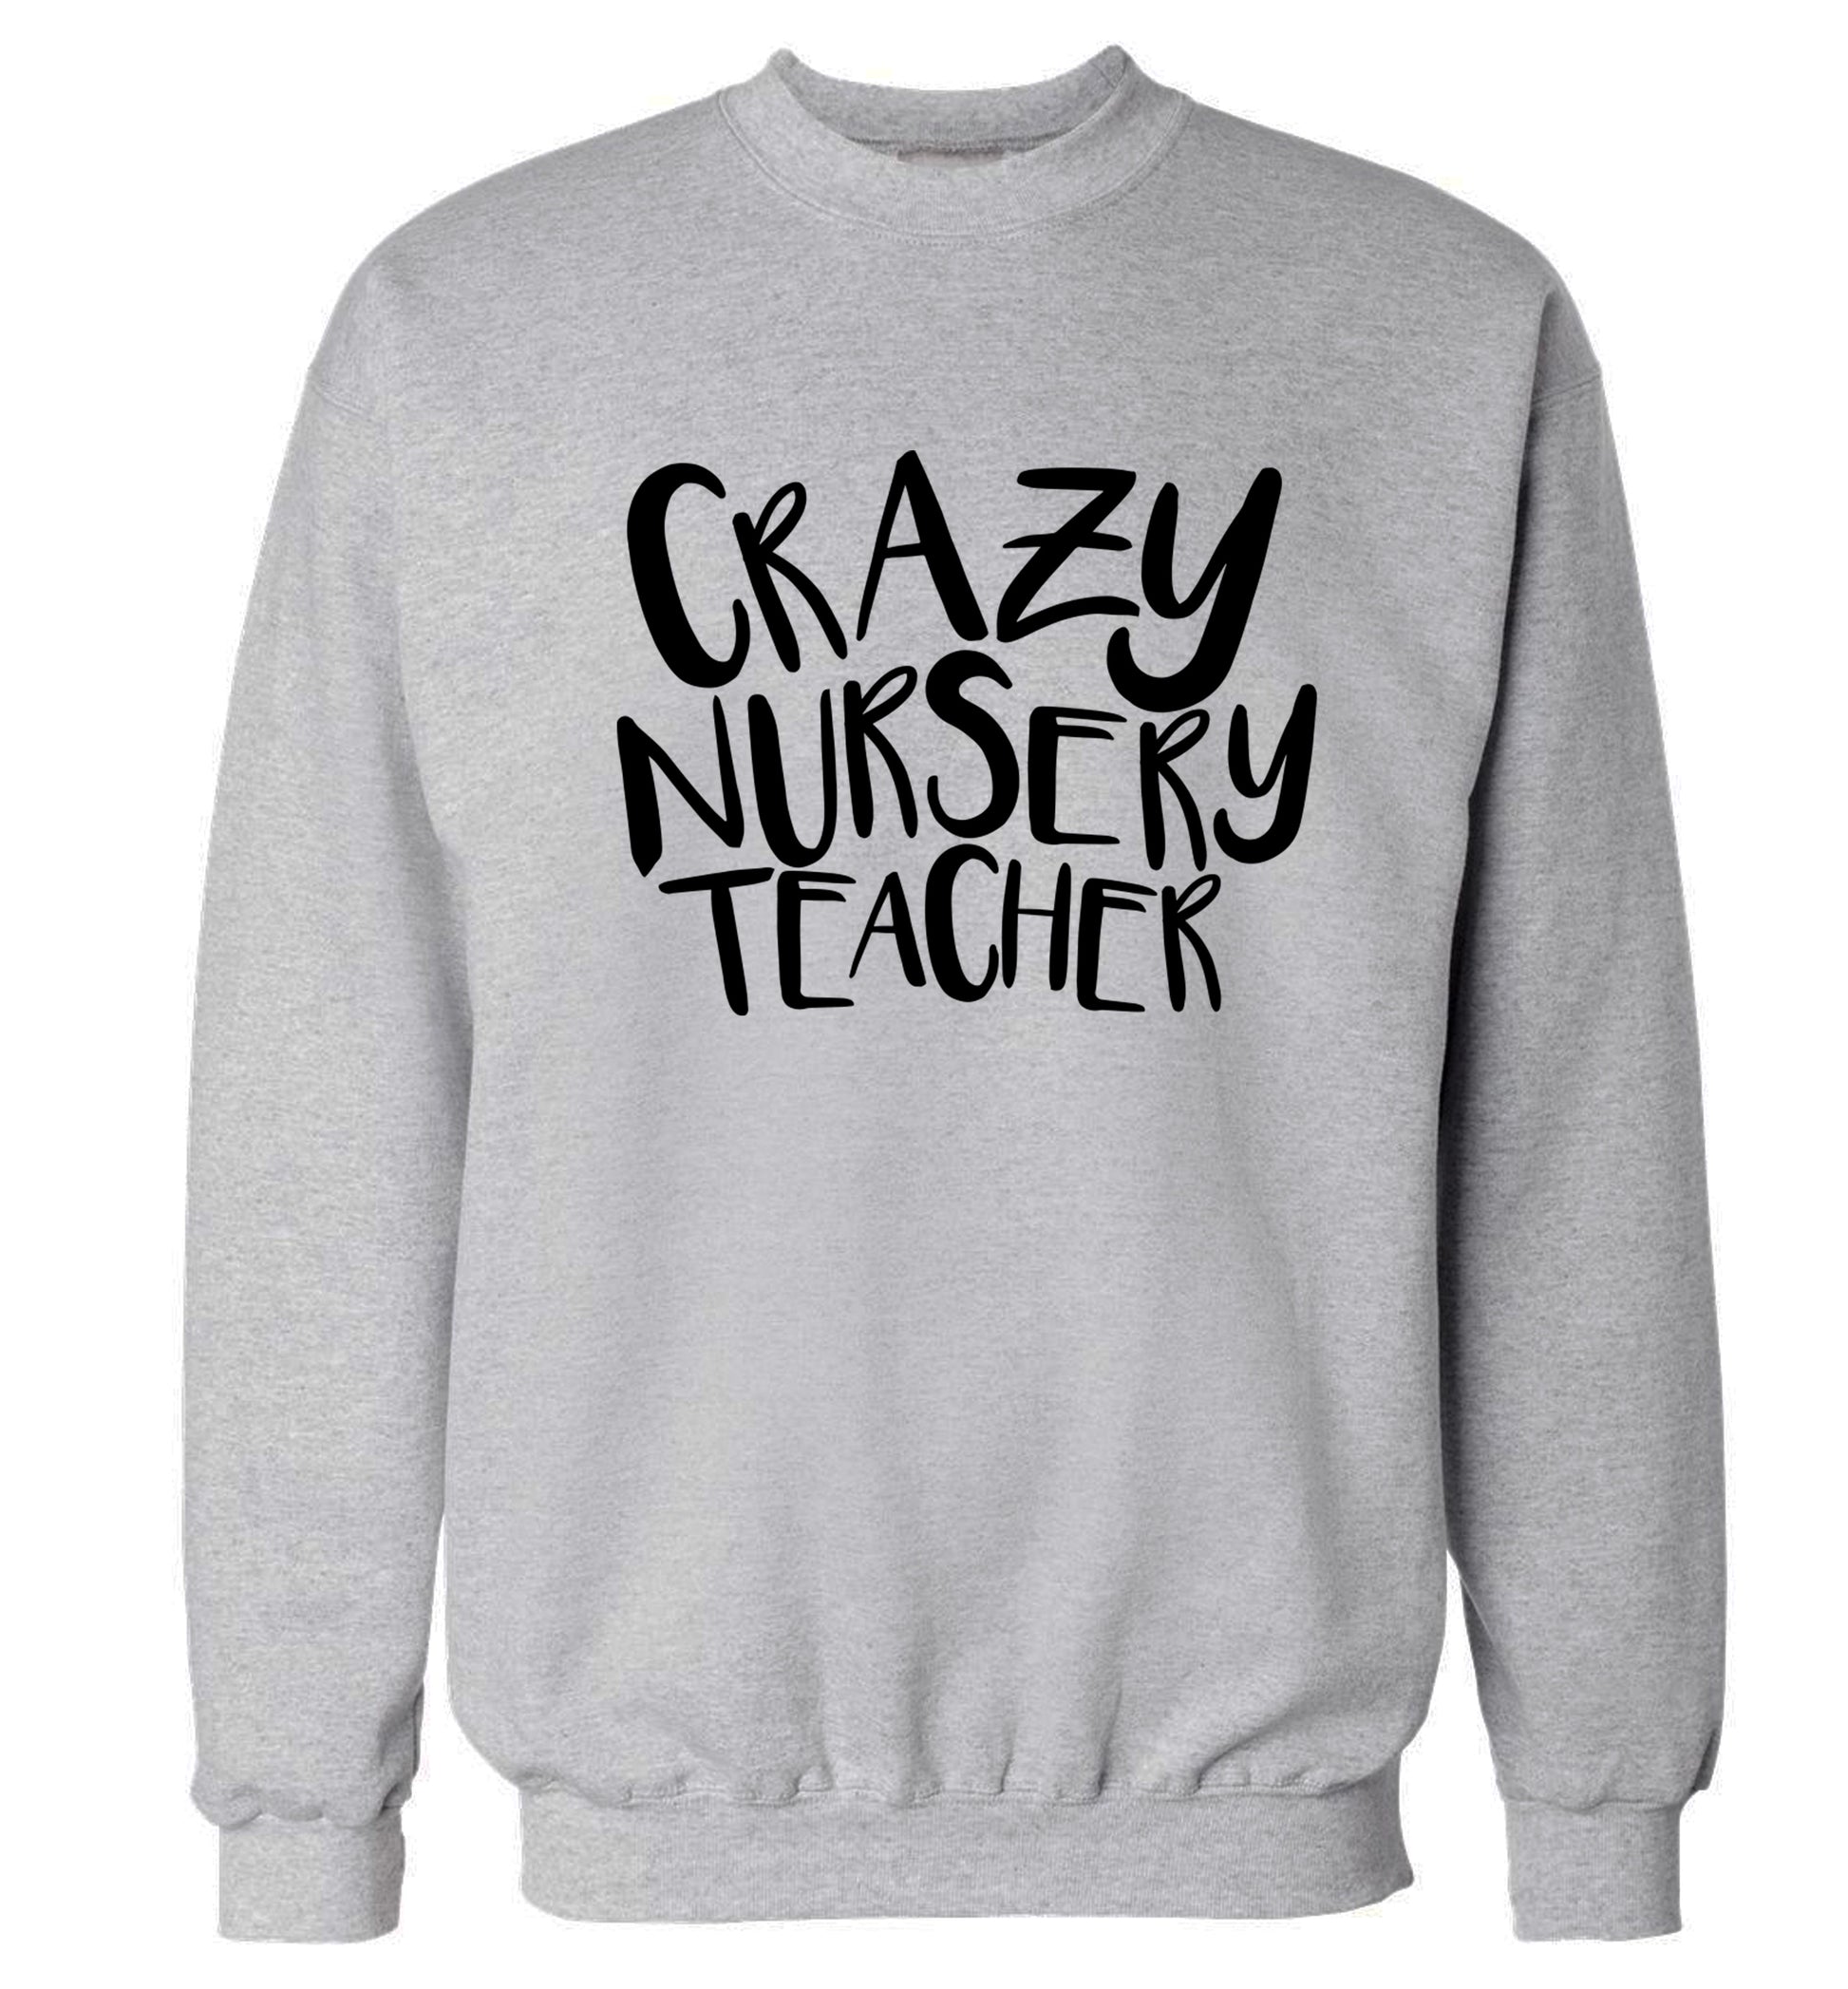 Crazy nursery teacher Adult's unisex grey Sweater 2XL